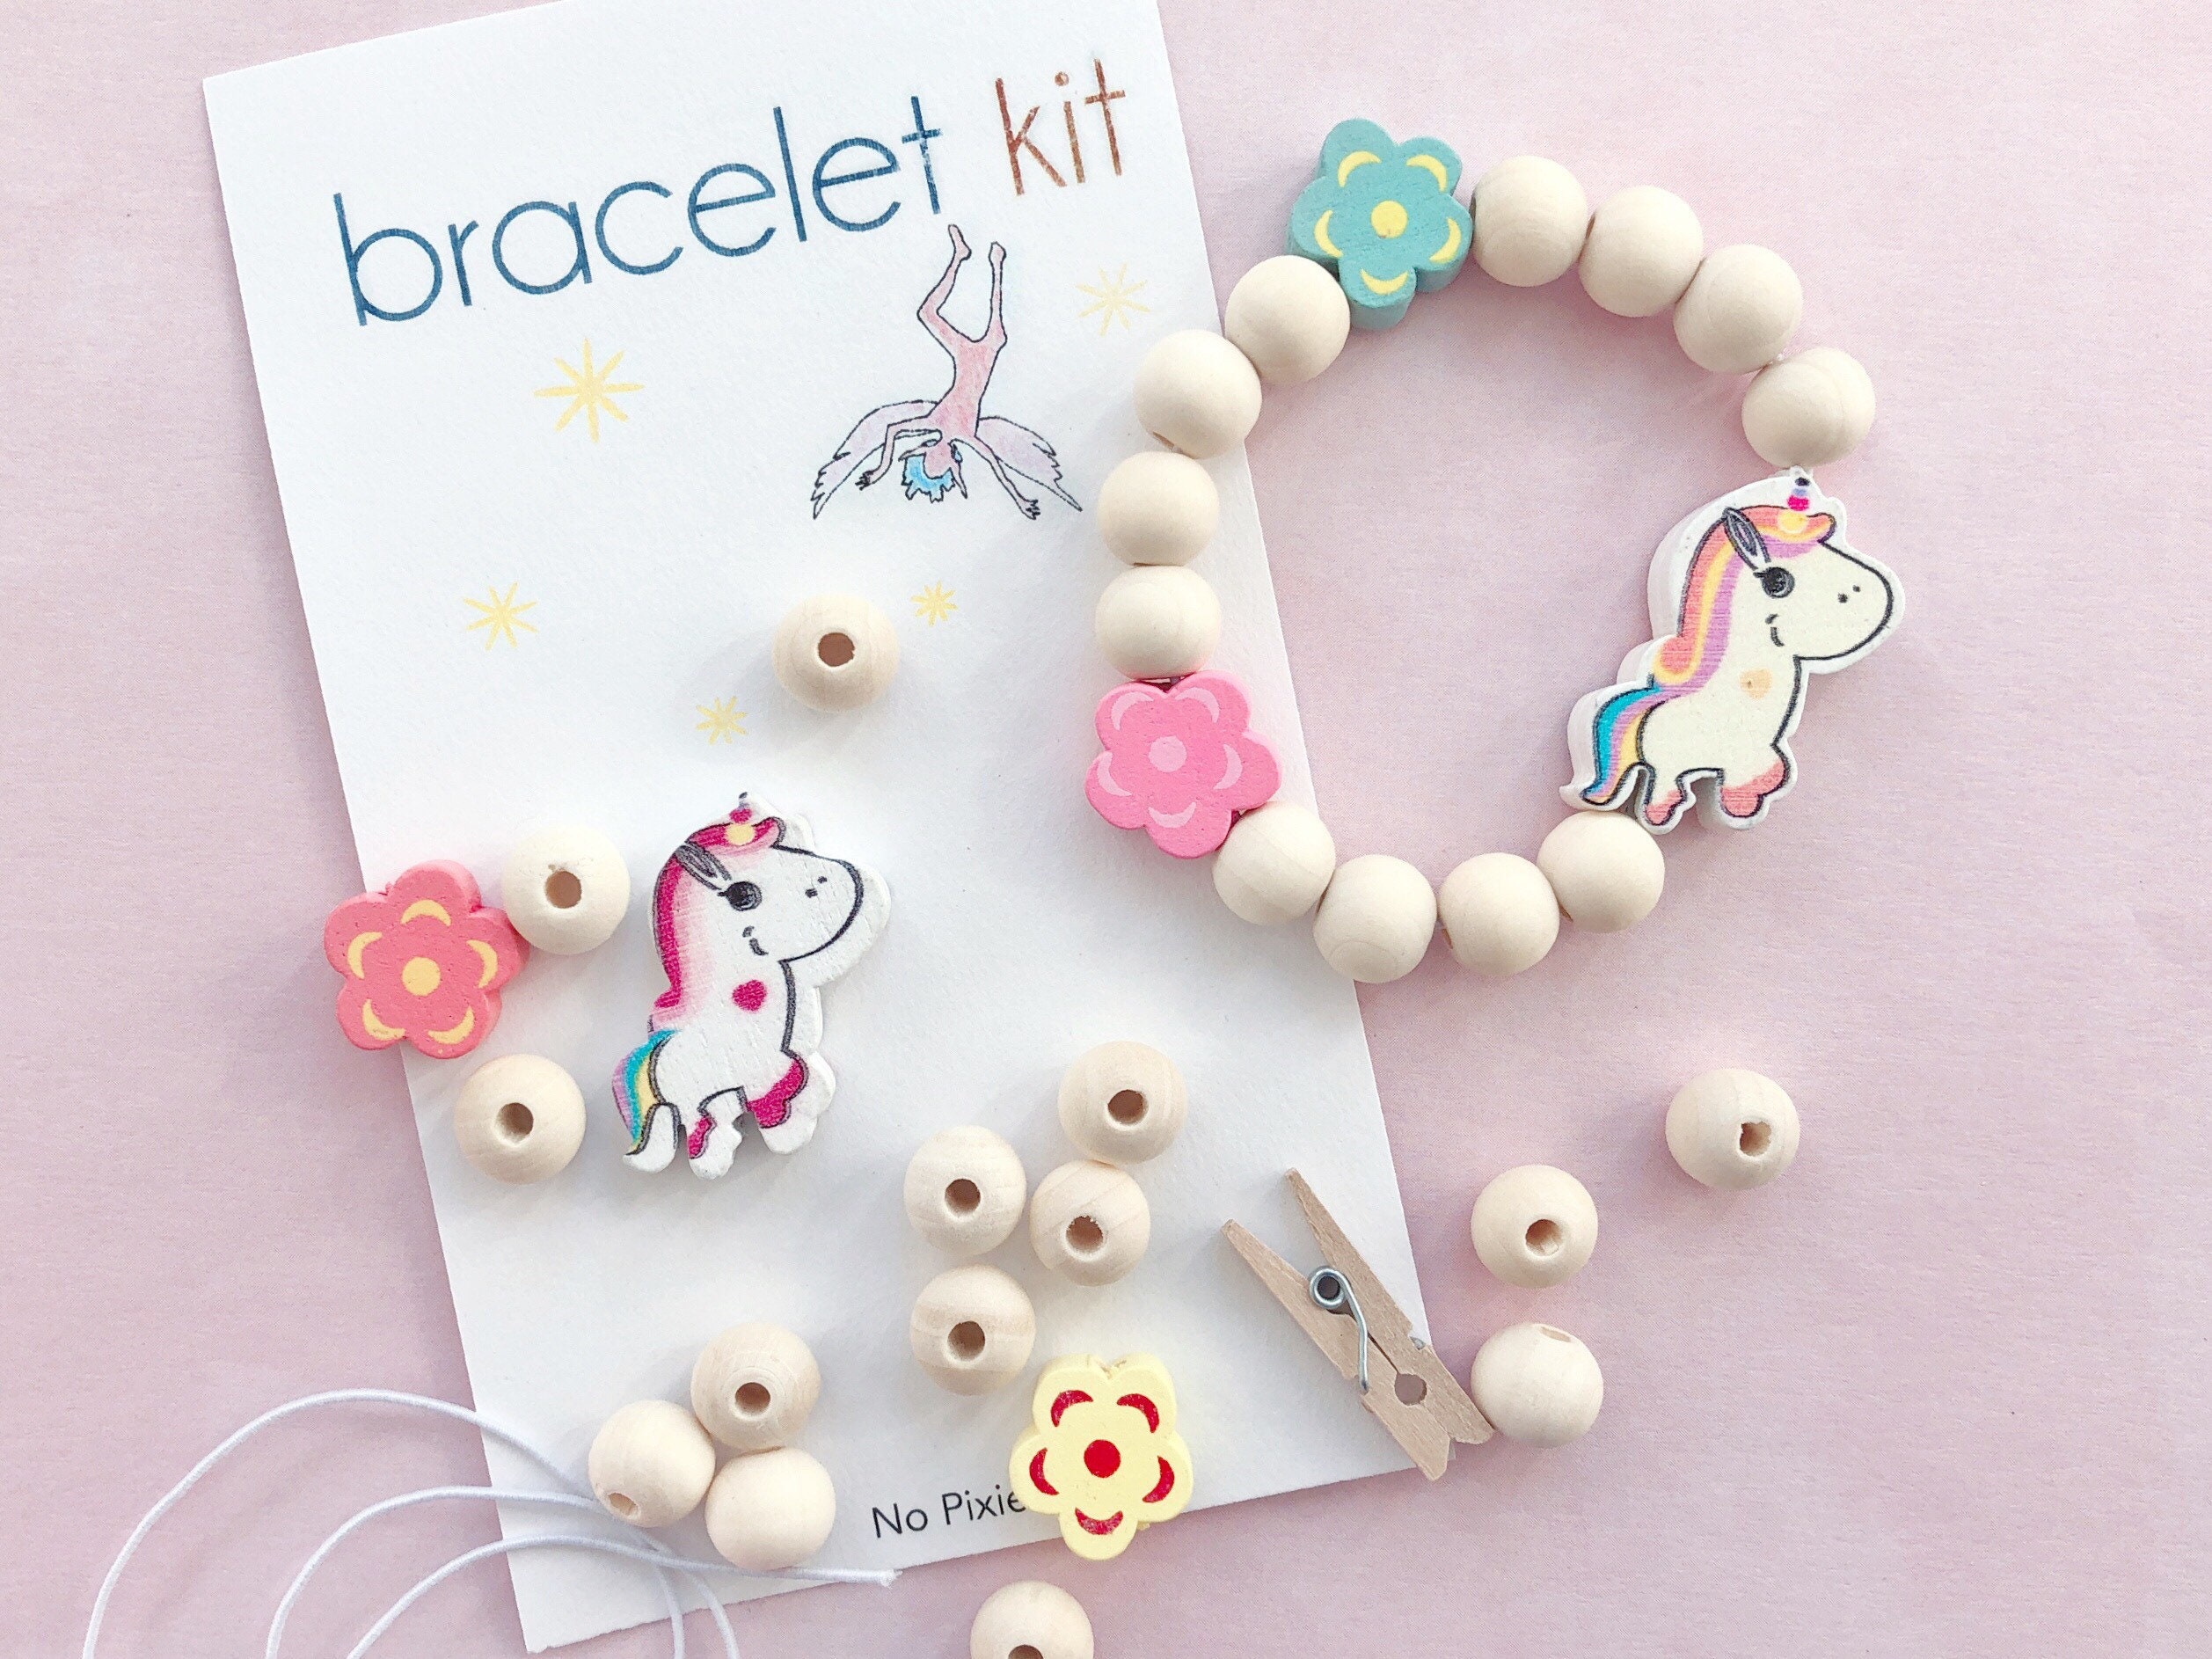 Unicorn Bracelet – Her Jewellery